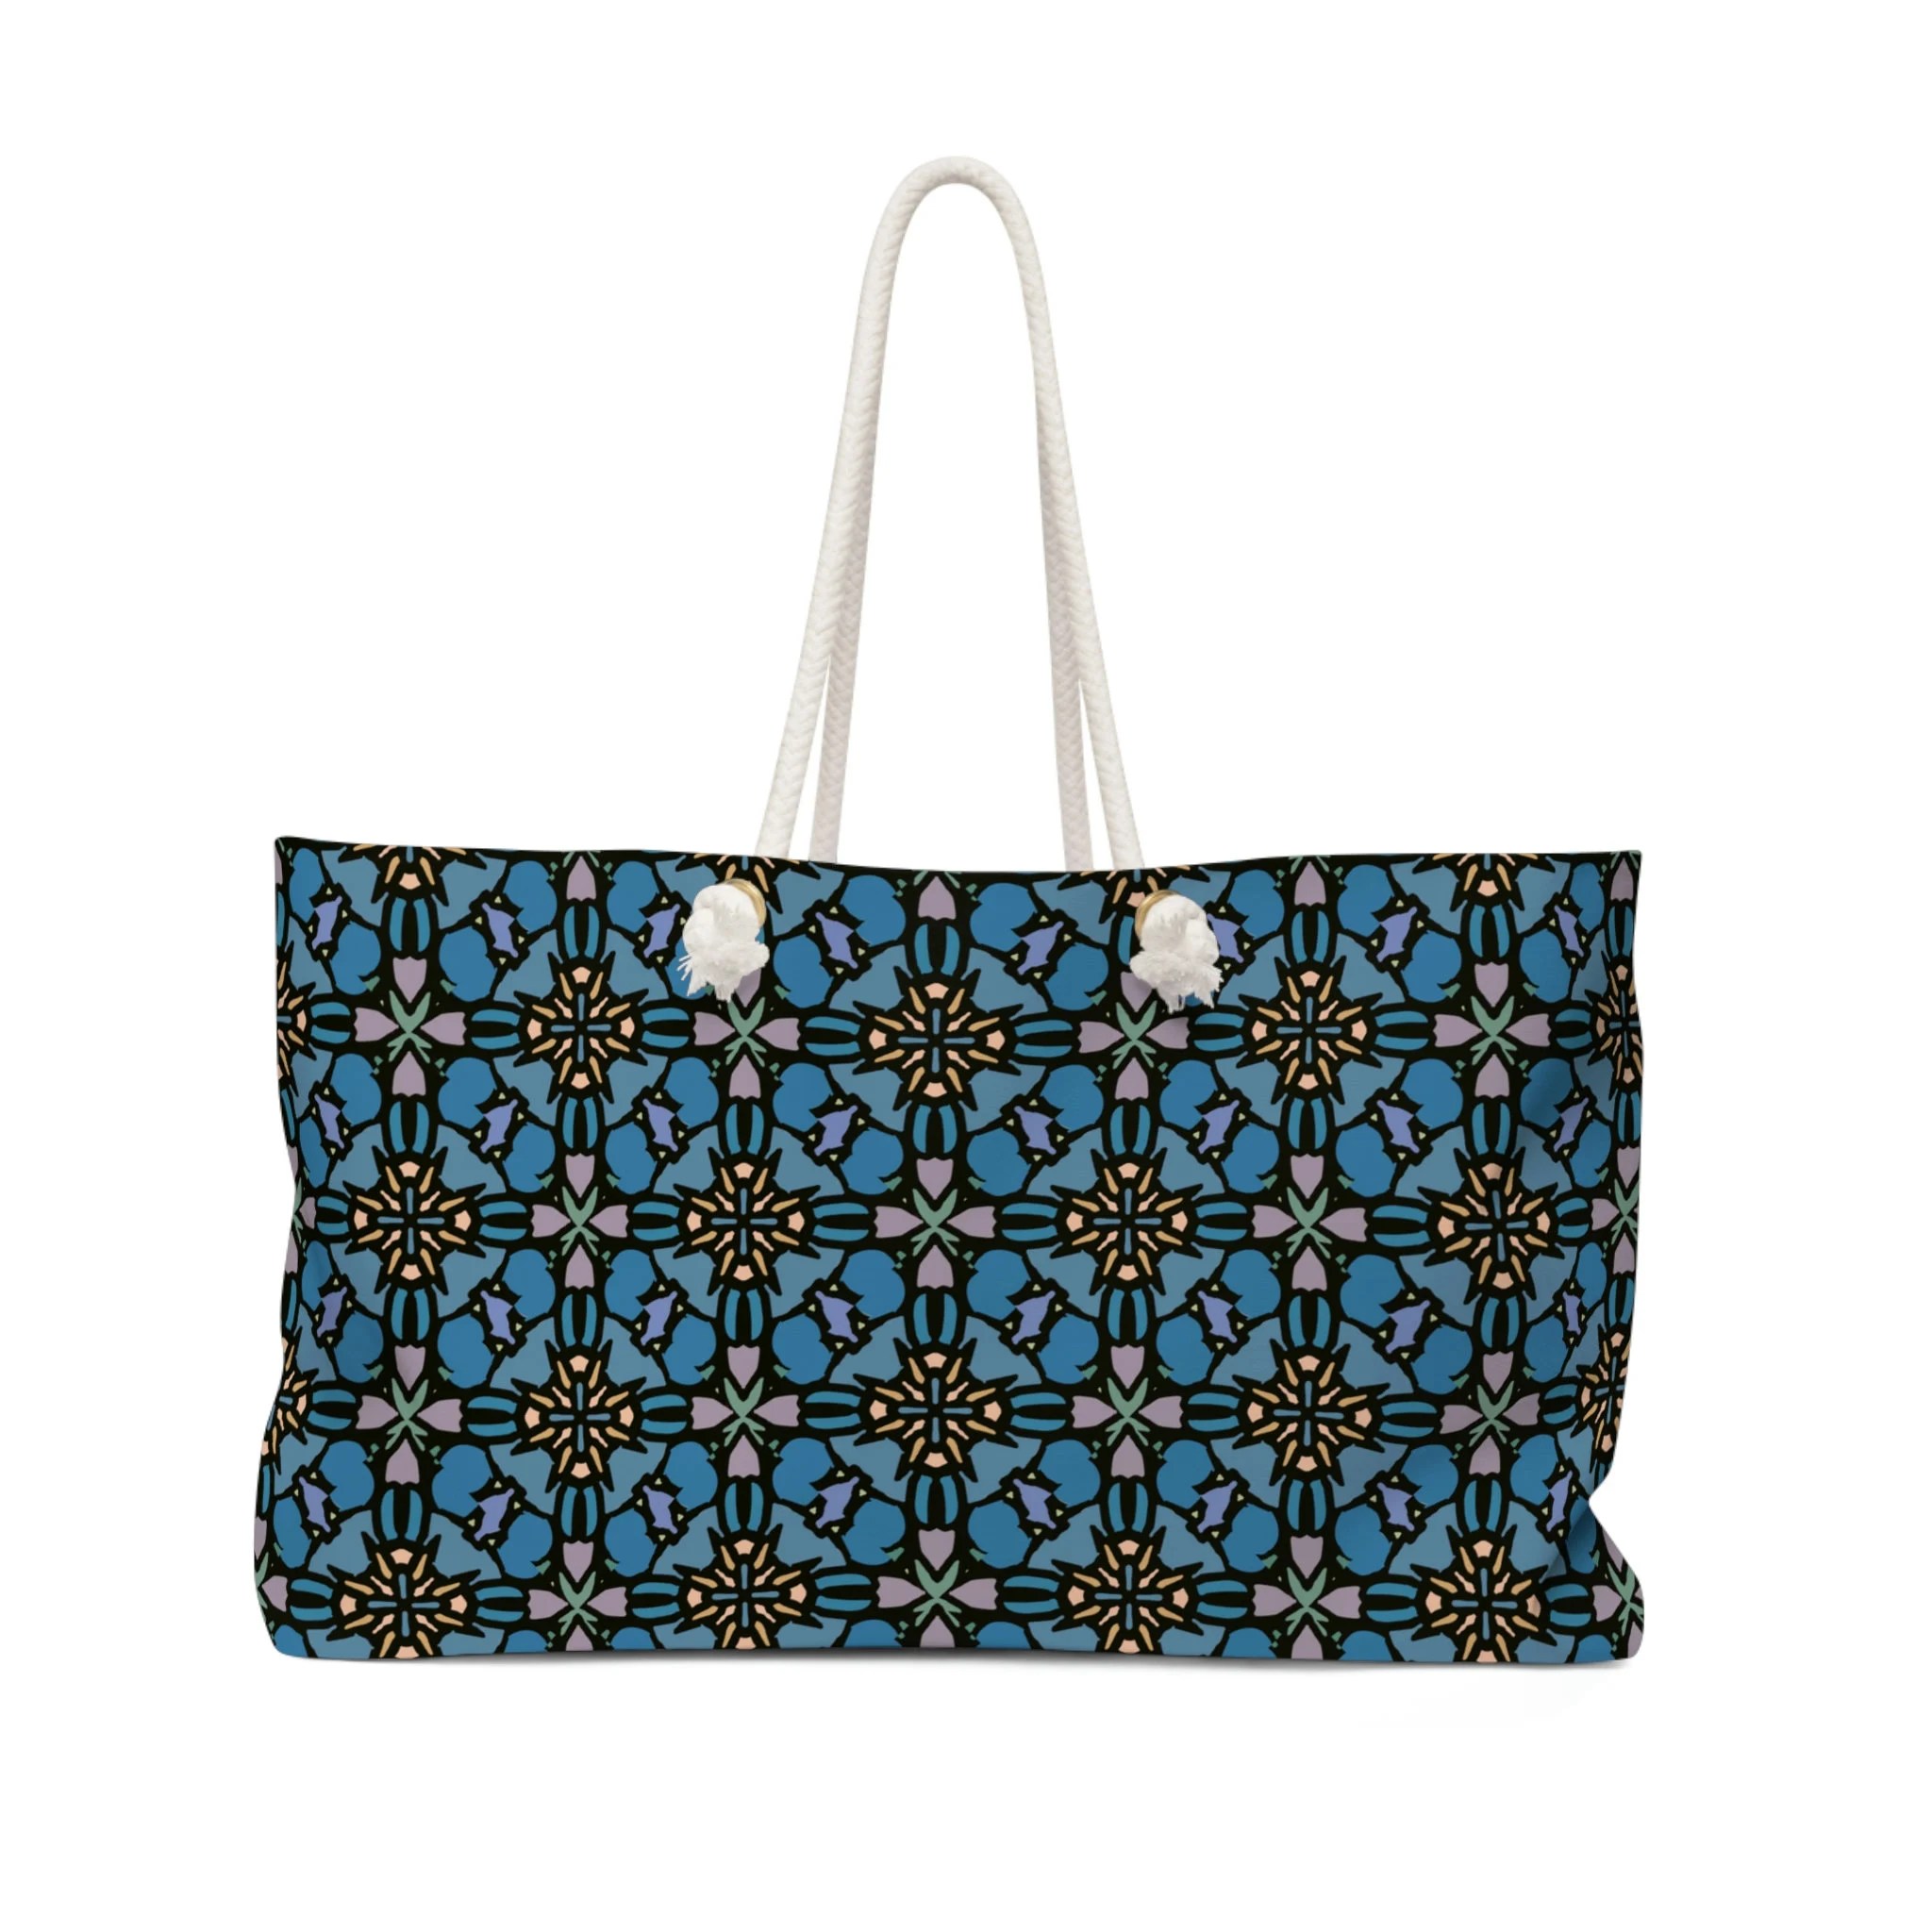 Weekender Tote Bag With Rope Handles + Lined Interior | Blue Mandala Design